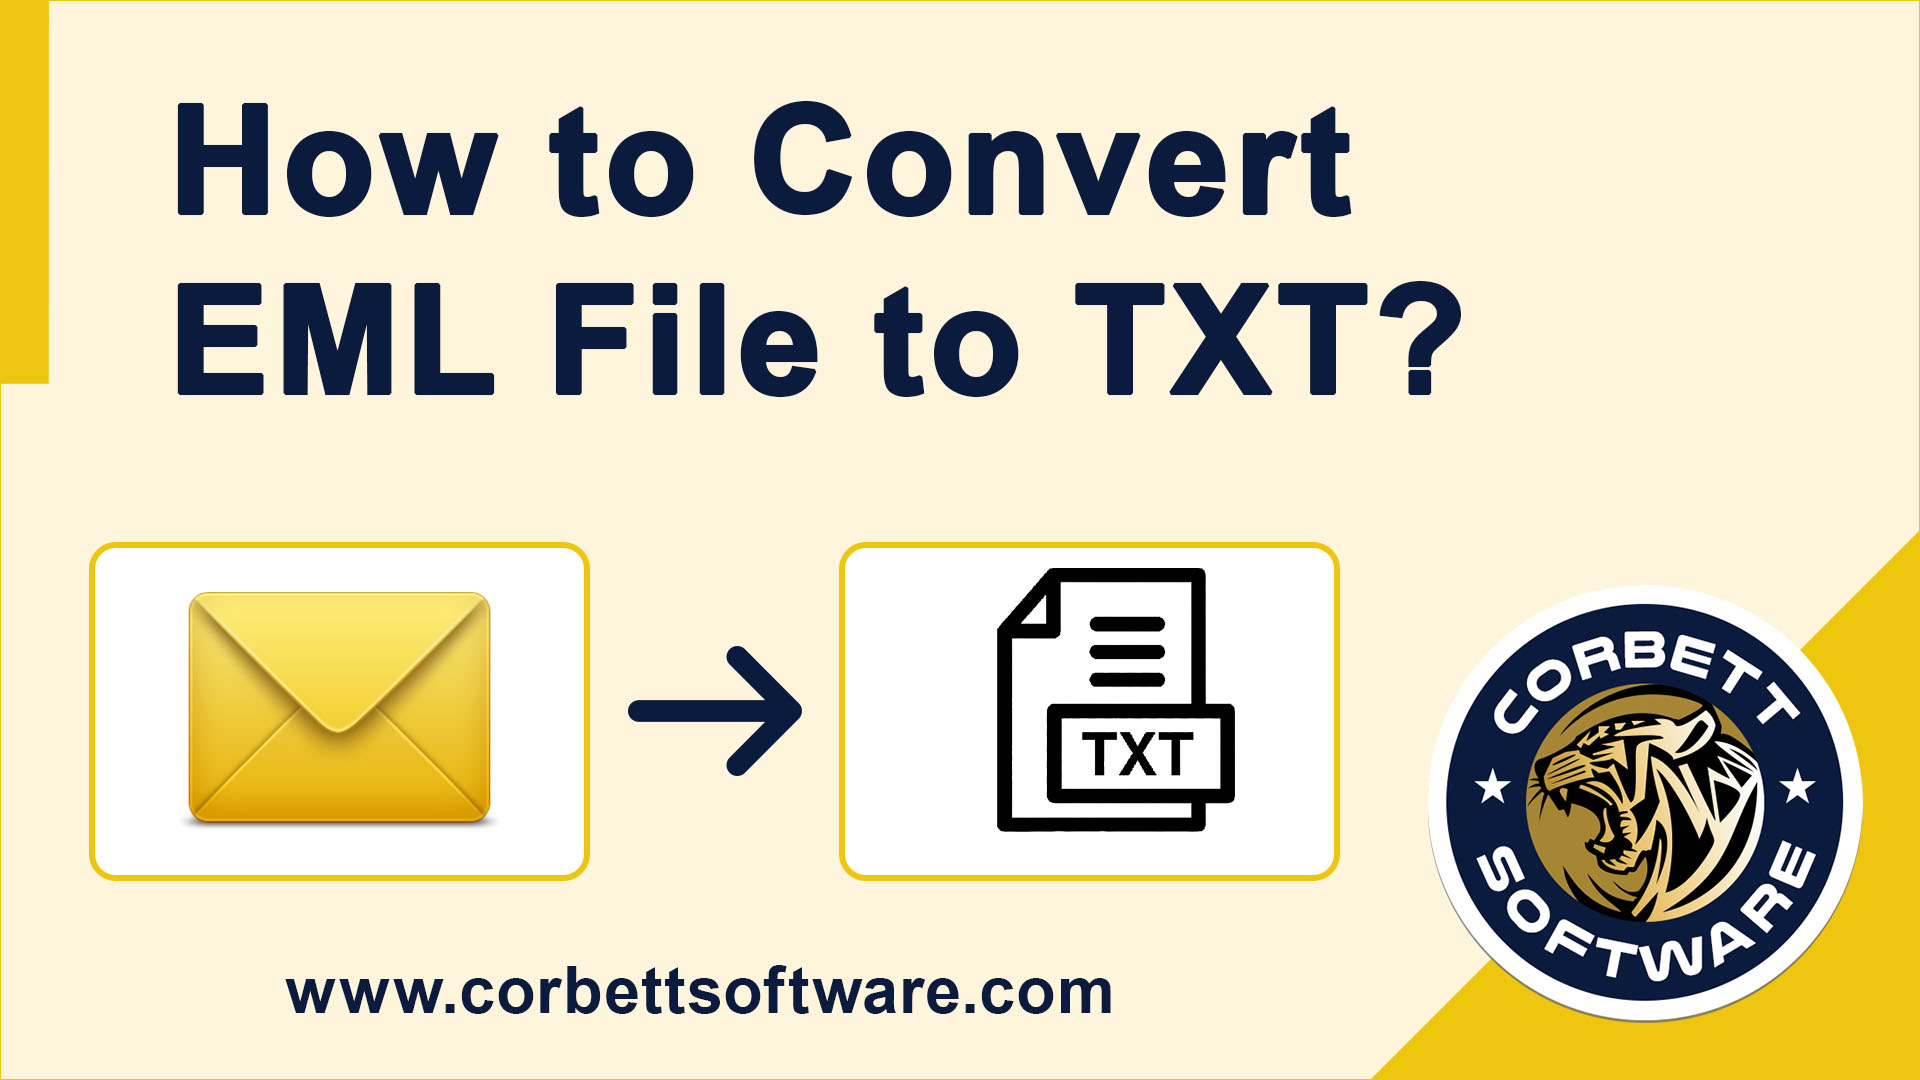 Convert EML File to TXT